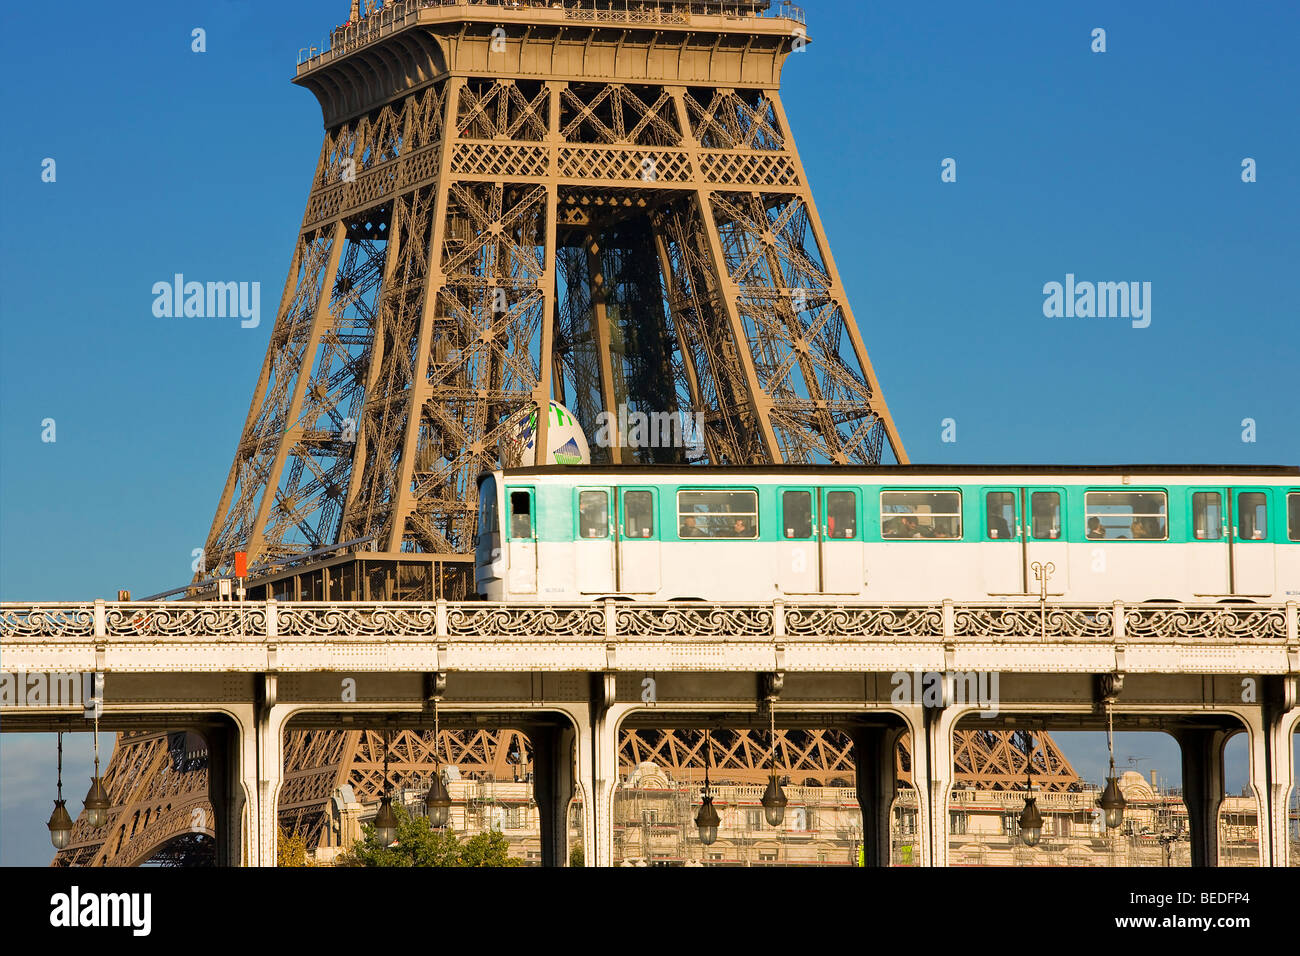 BIR HAKEIM BRIDGE AND RAILWAY, PARIS Stock Photo